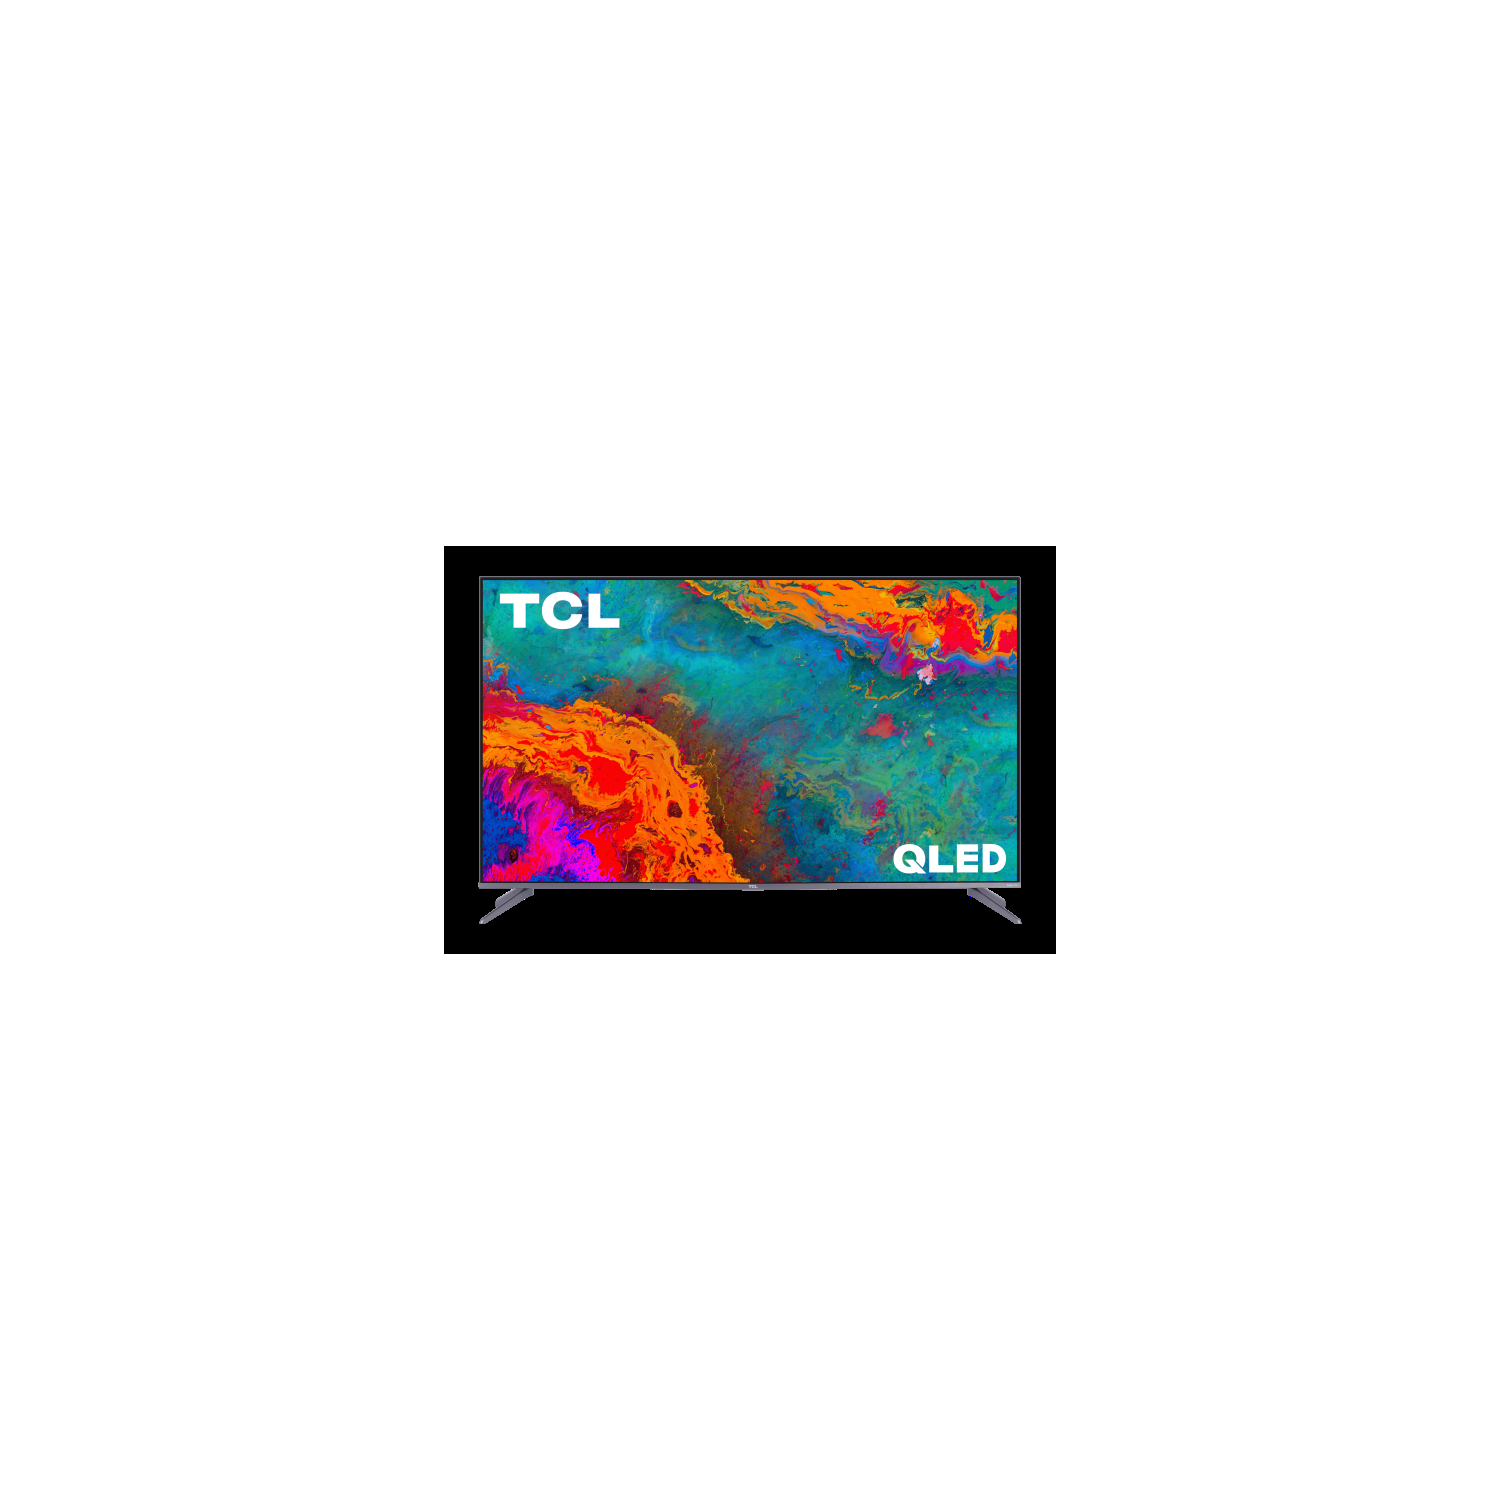 Refurbished(Good) - TCL 50" Class 5-Series 4K UHD Dolby Vision HDR QLED Roku Smart TV (50S535)